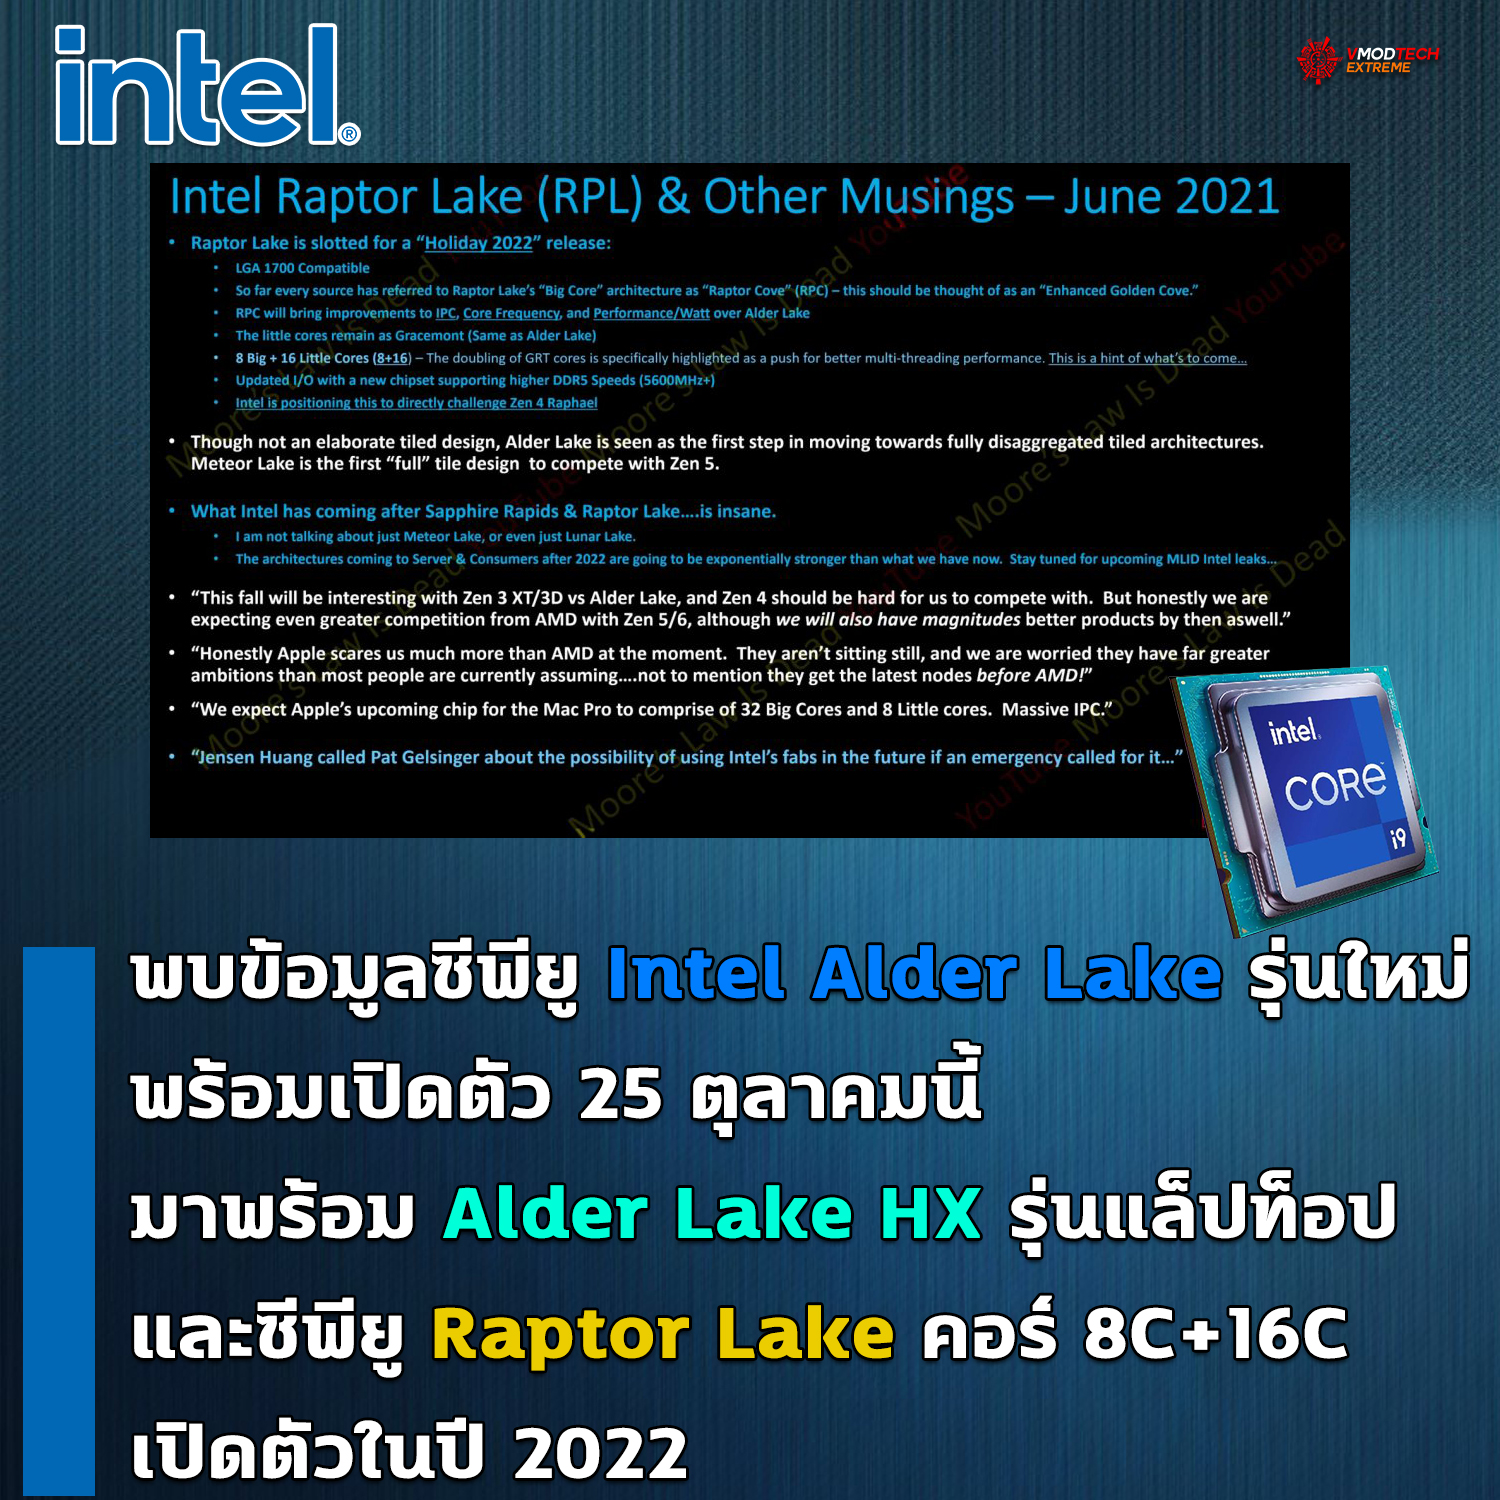 intel raptor lake พบข้อมูลซีพียู Intel Alder Lake รุ่นใหม่พร้อมเปิดตัว 25 ตุลาคมนี้มาพร้อม Alder Lake HX รุ่นแล็ปท็อปและซีพียู Raptor Lake รุ่นต่อไปมีจำนวนคอร์ 8C+16C เปิดตัวในปี 2022 